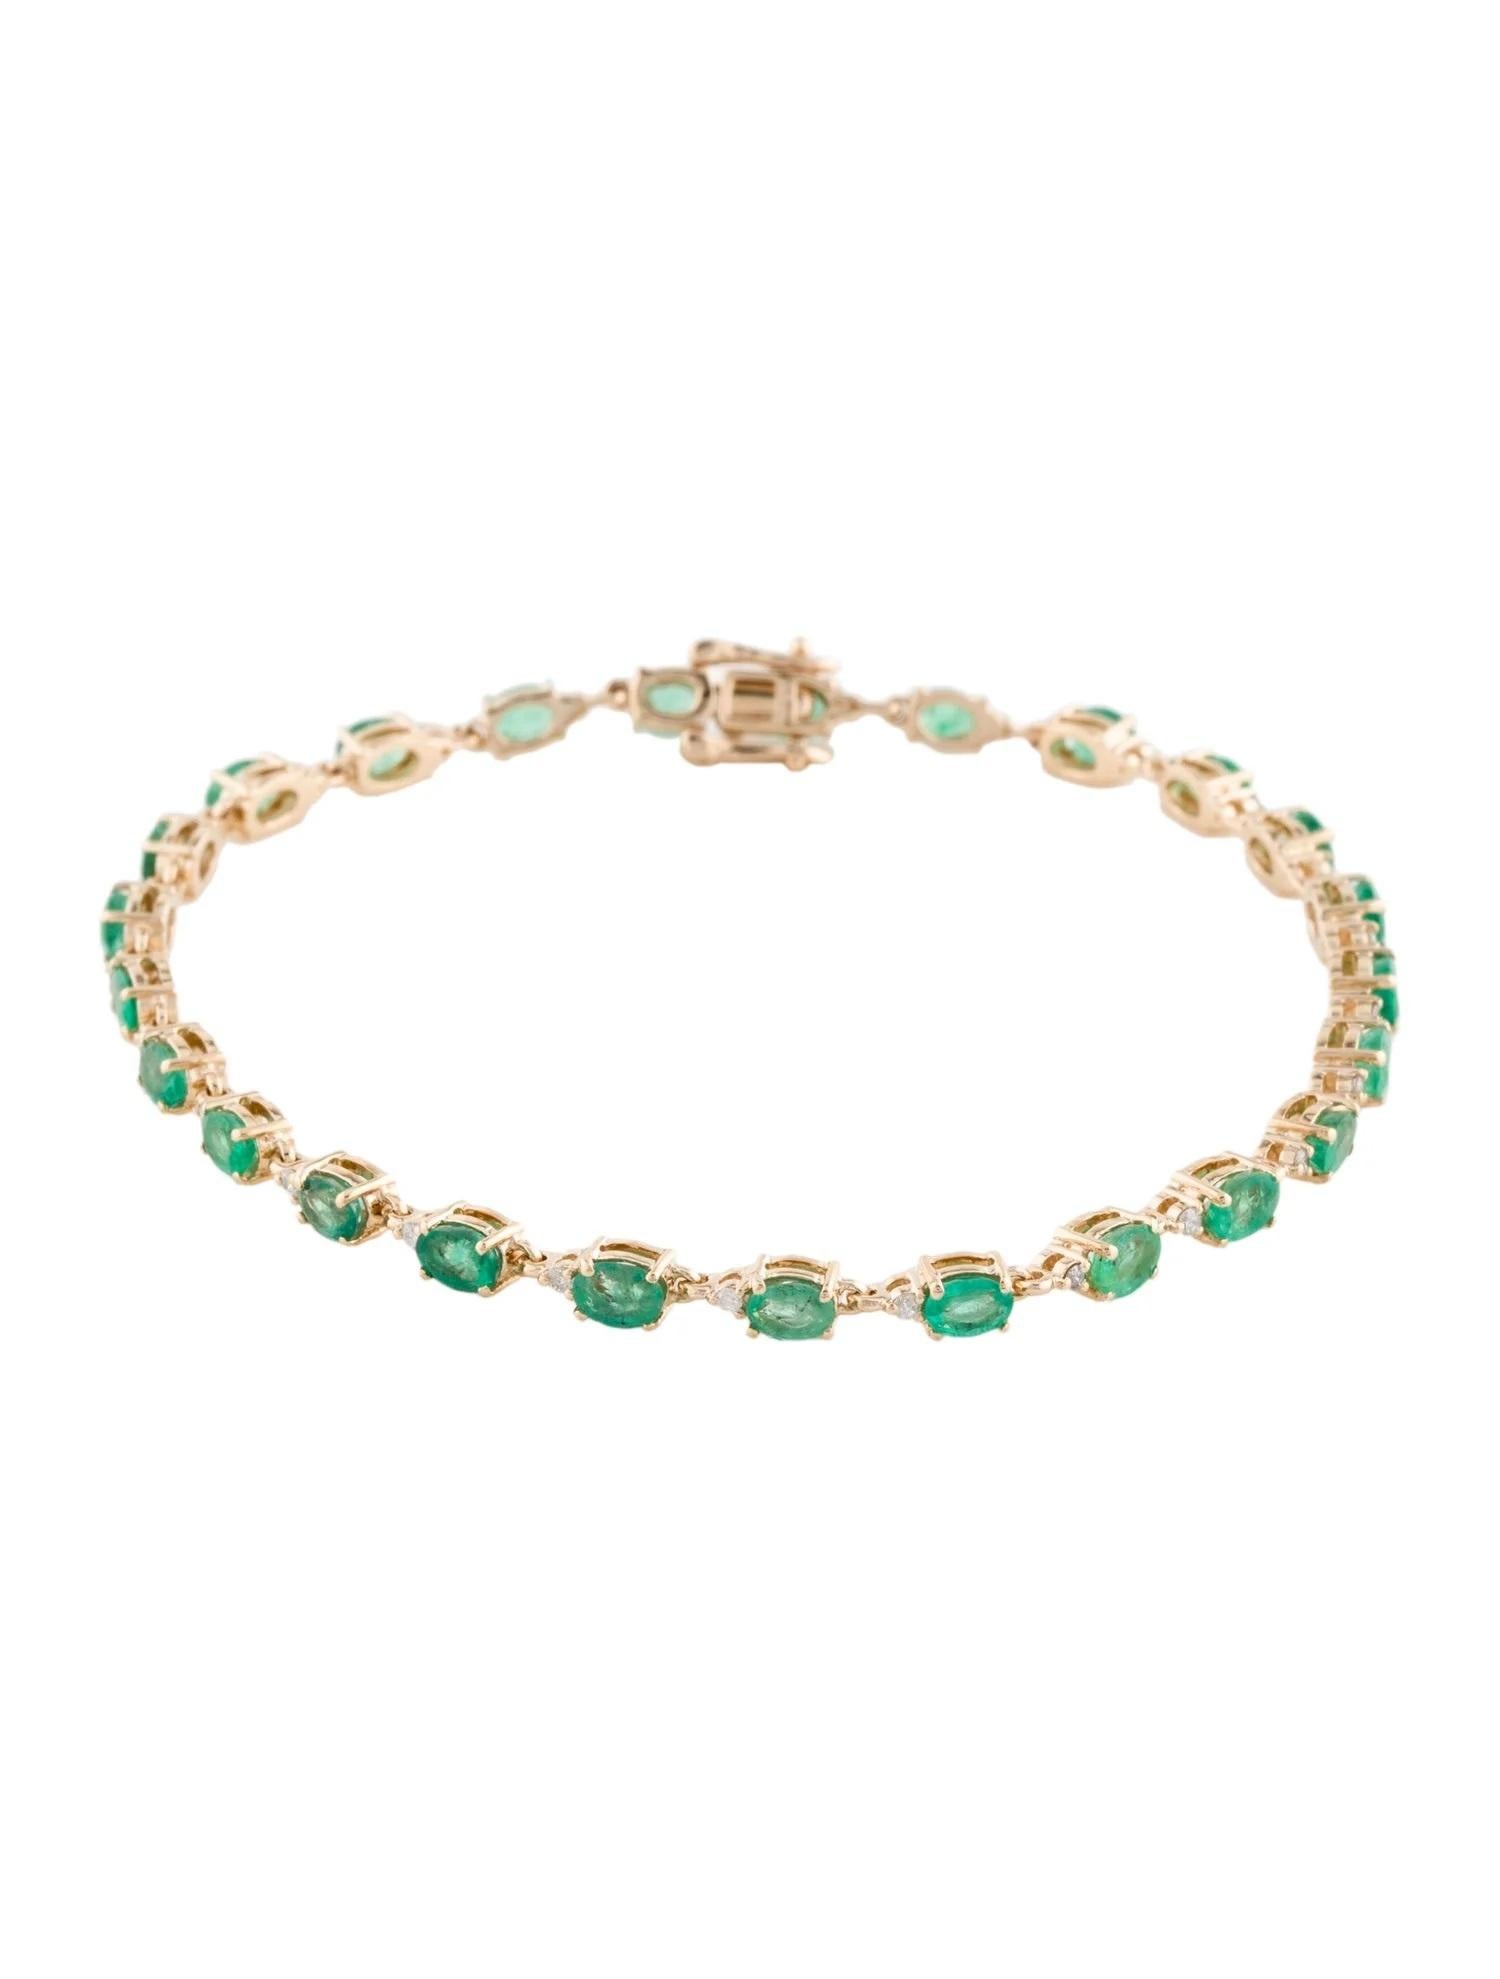 Emerald Cut 14K Emerald & Diamond Link Bracelet  4.09ctw Emeralds  Yellow Gold For Sale